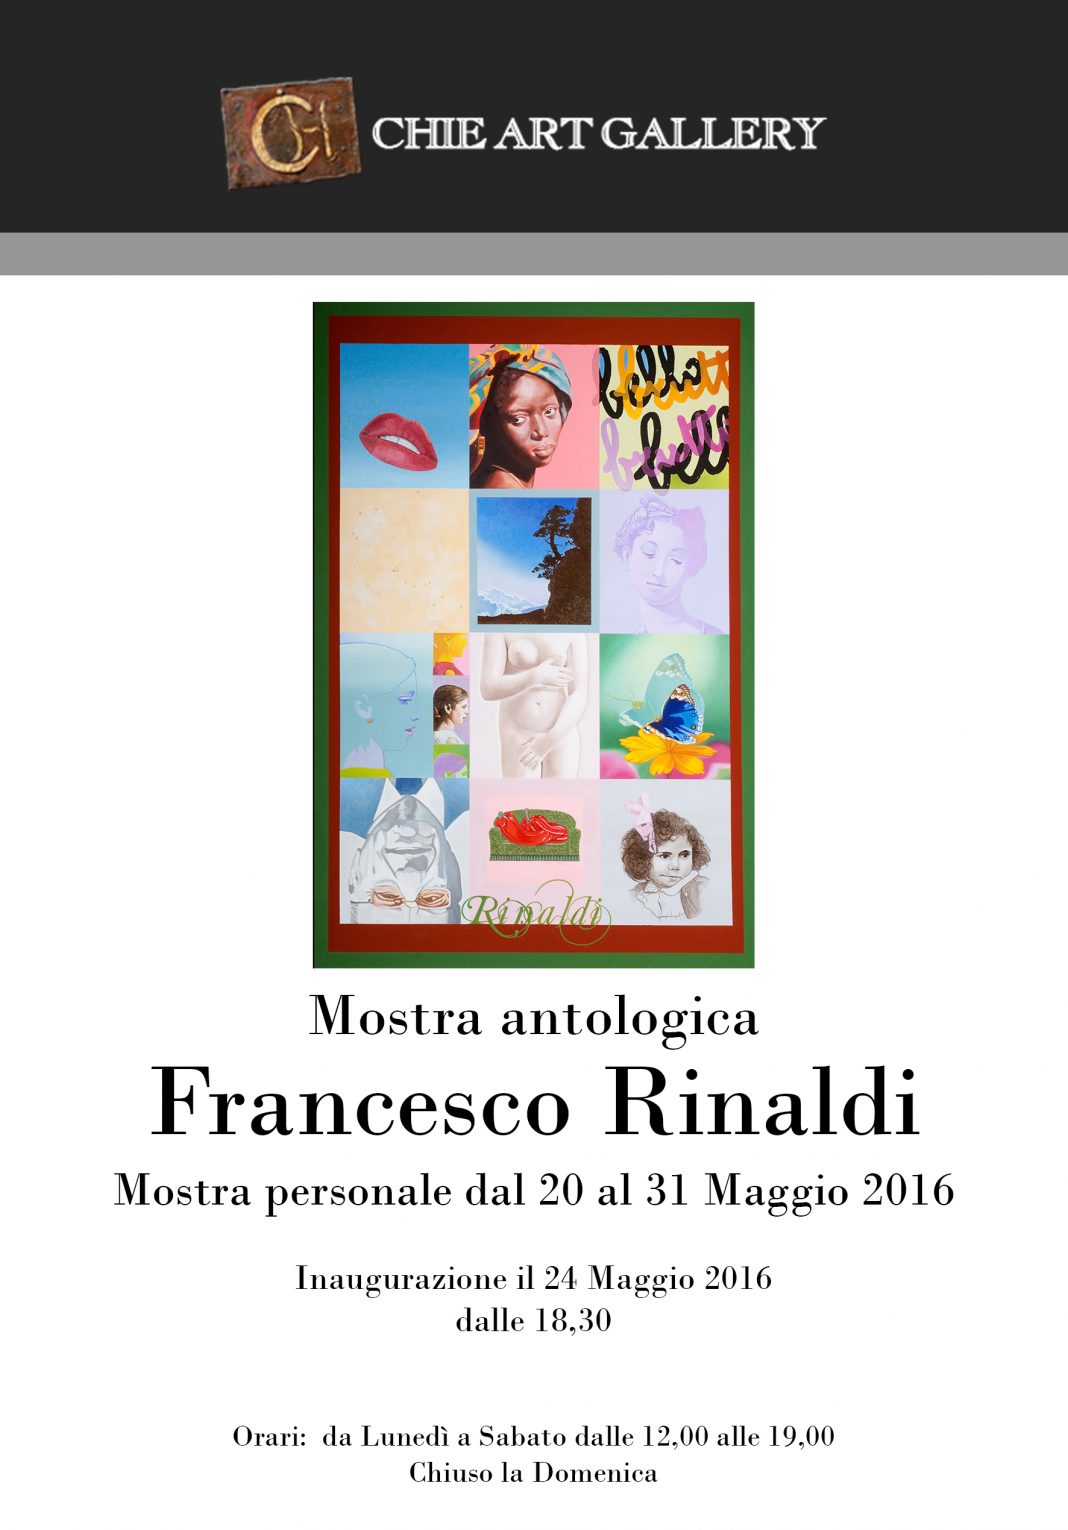 Francesco Rinaldihttps://www.exibart.com/repository/media/eventi/2016/05/francesco-rinaldi-1068x1530.jpg